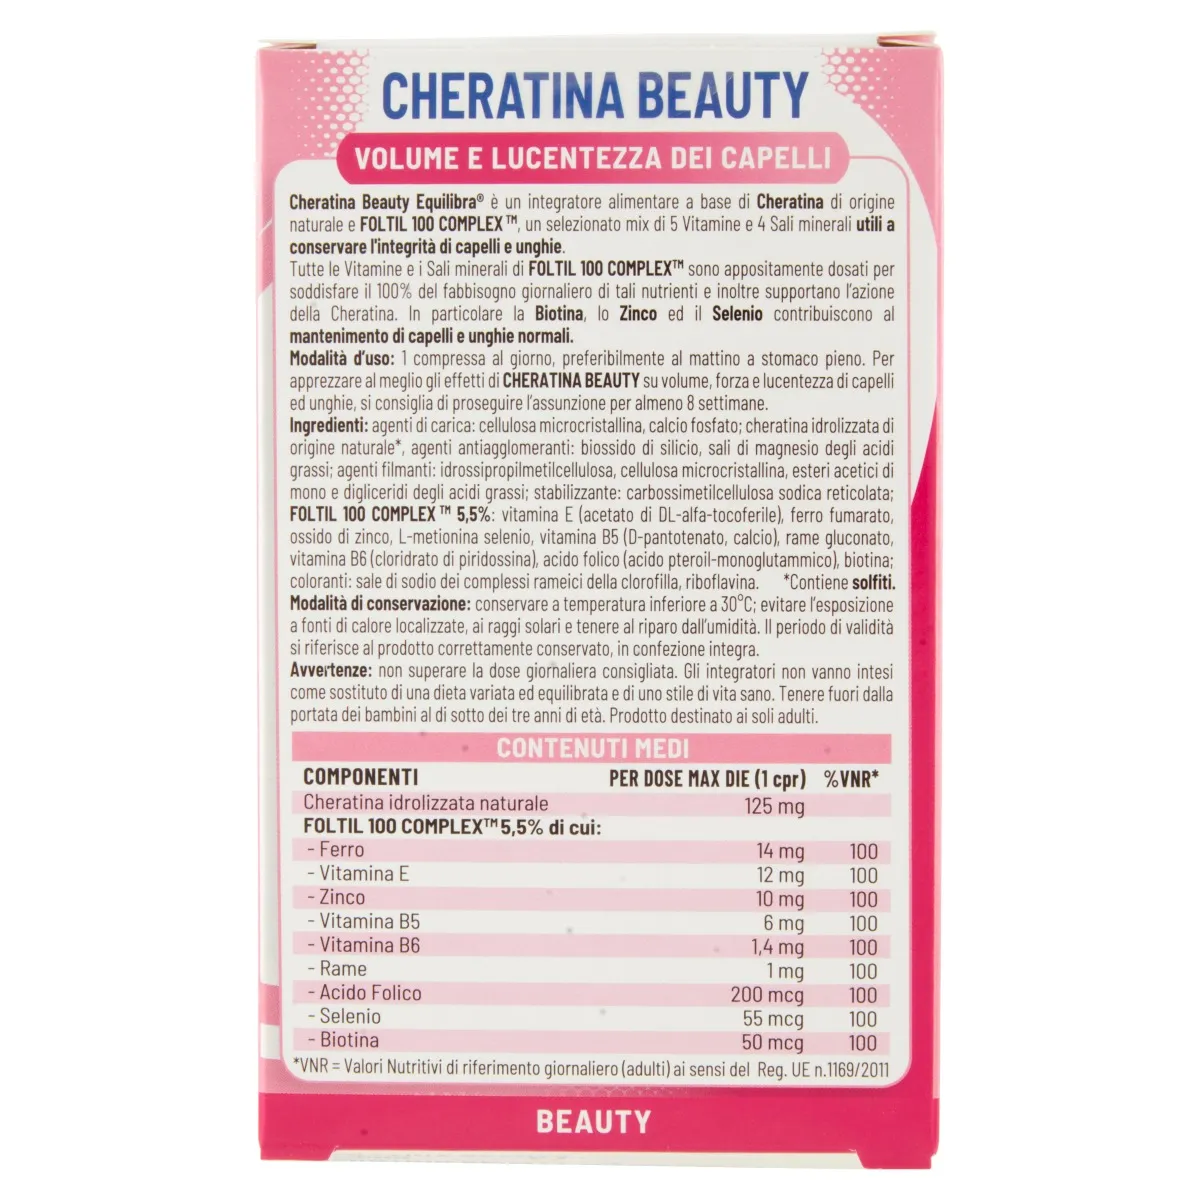 Equilibra Cheratina Beauty 20 Compresse Unghie e Capelli